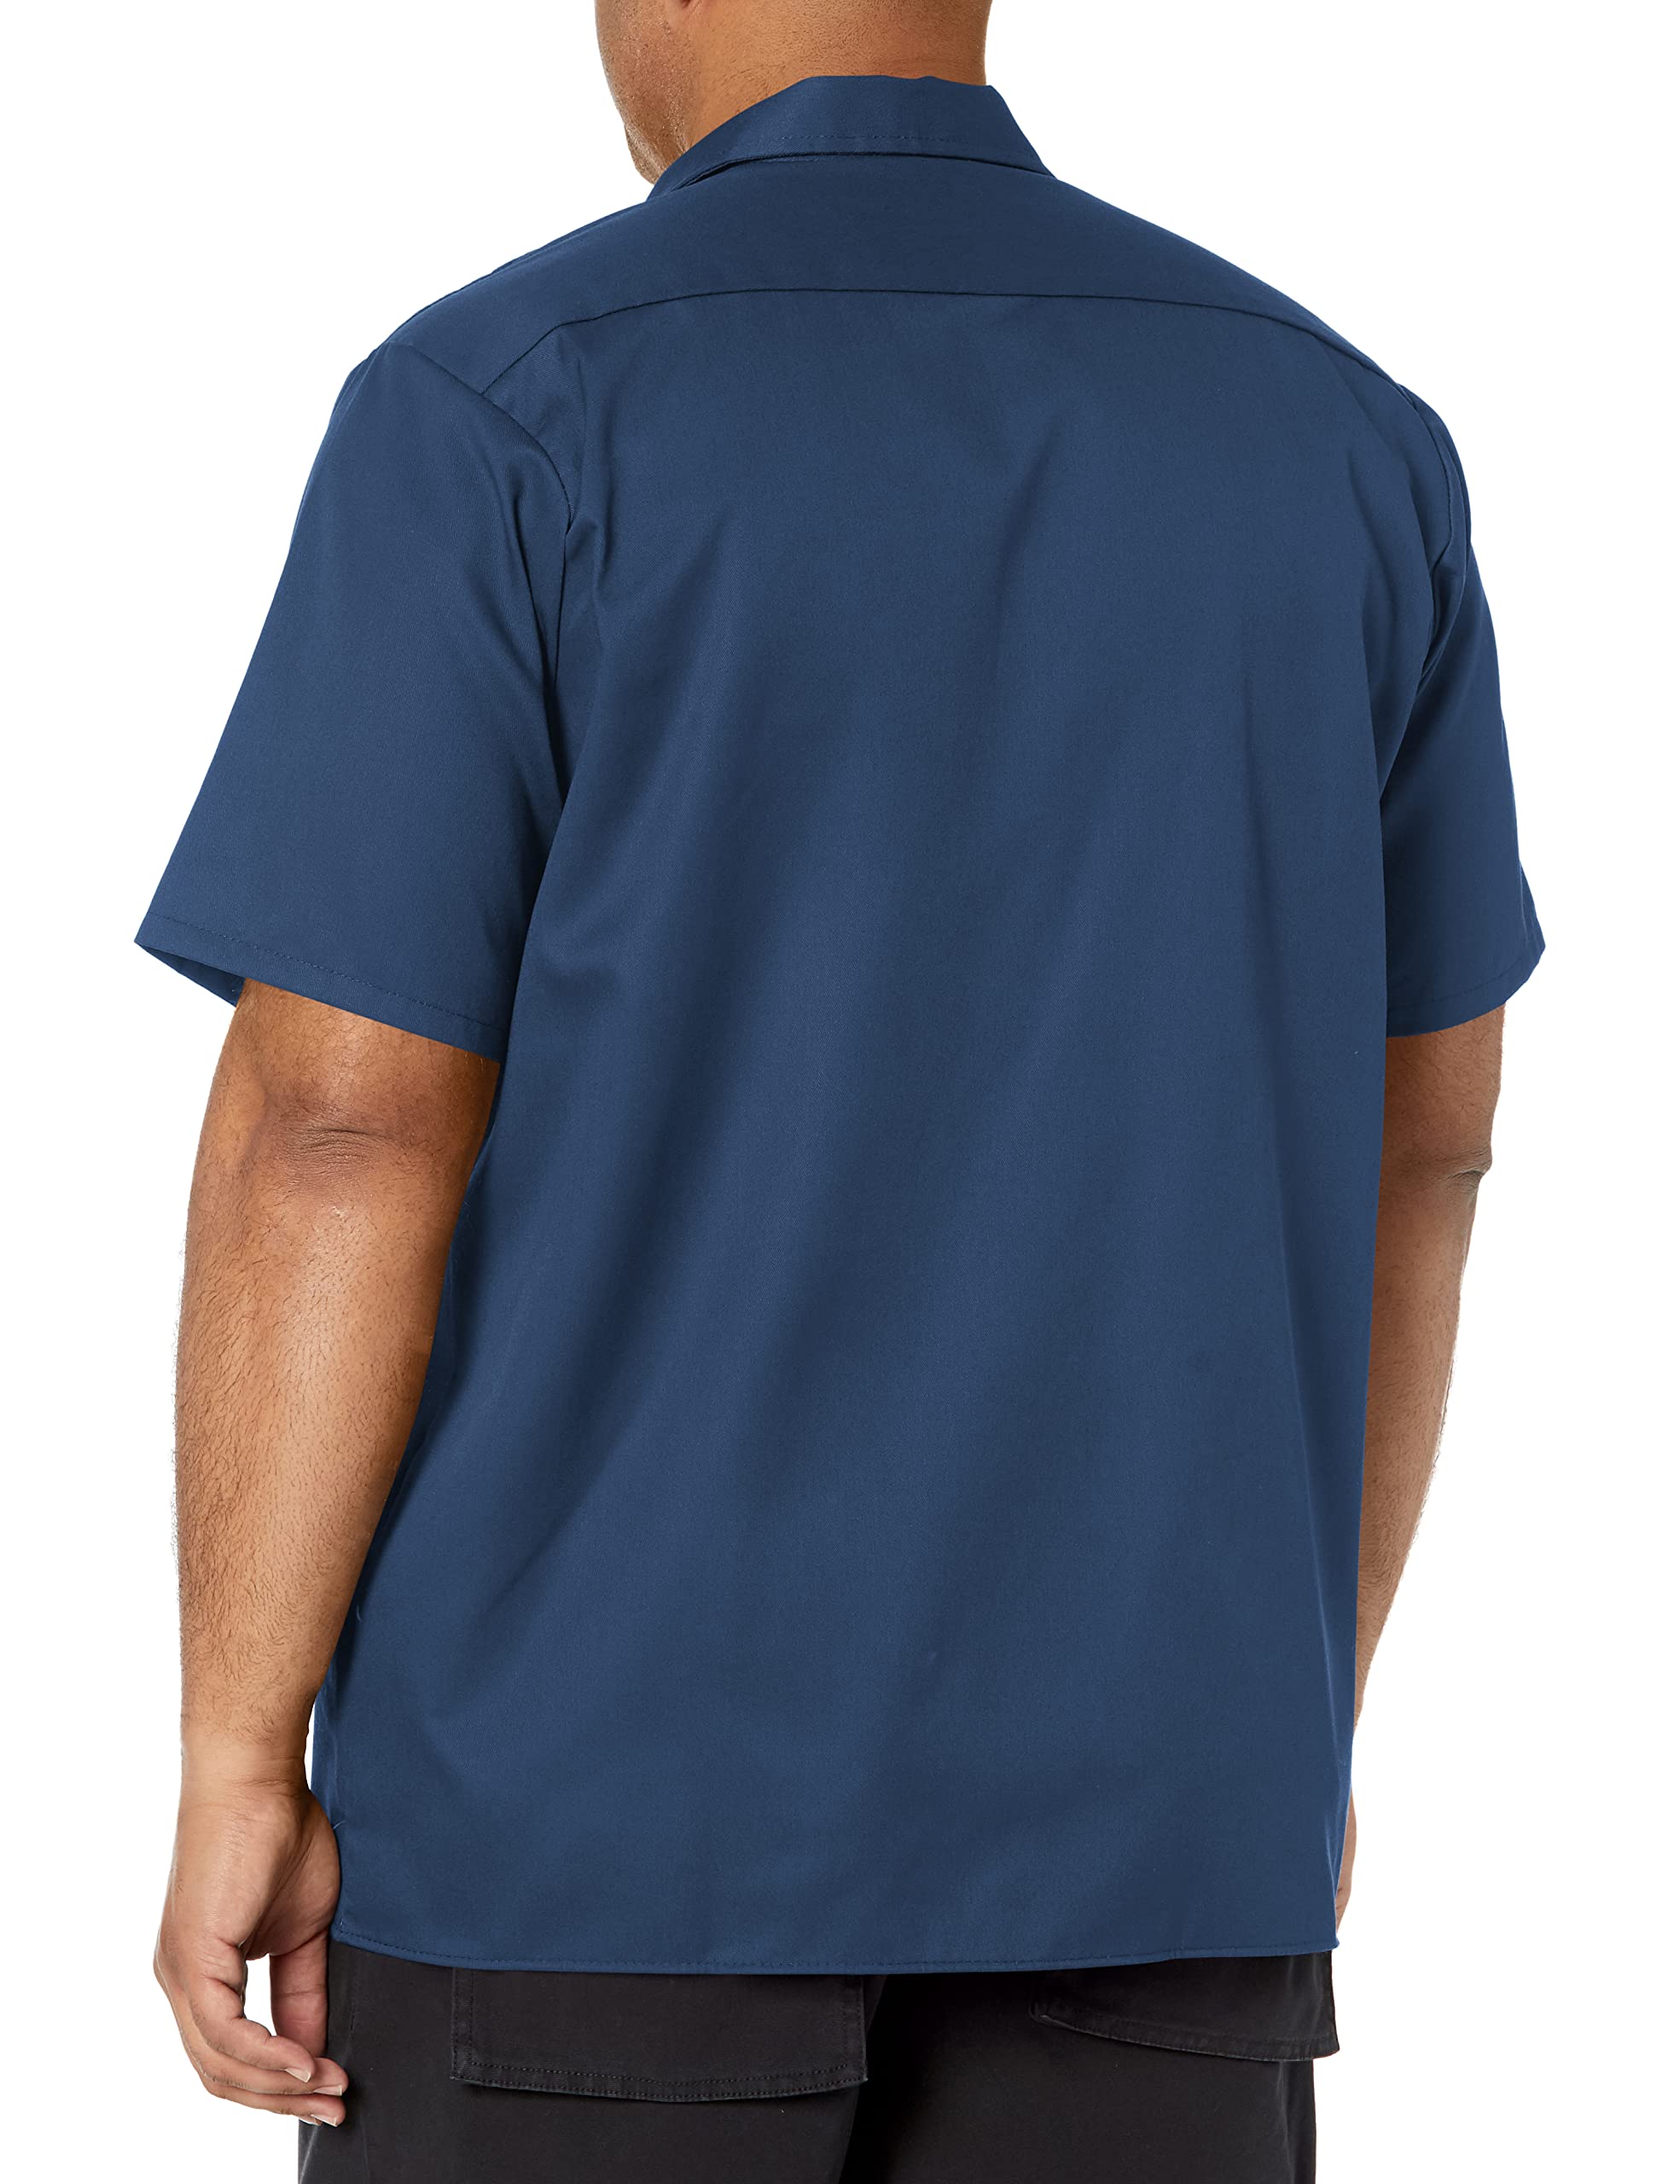 Red Kap Men's Utility Uniform Shirt